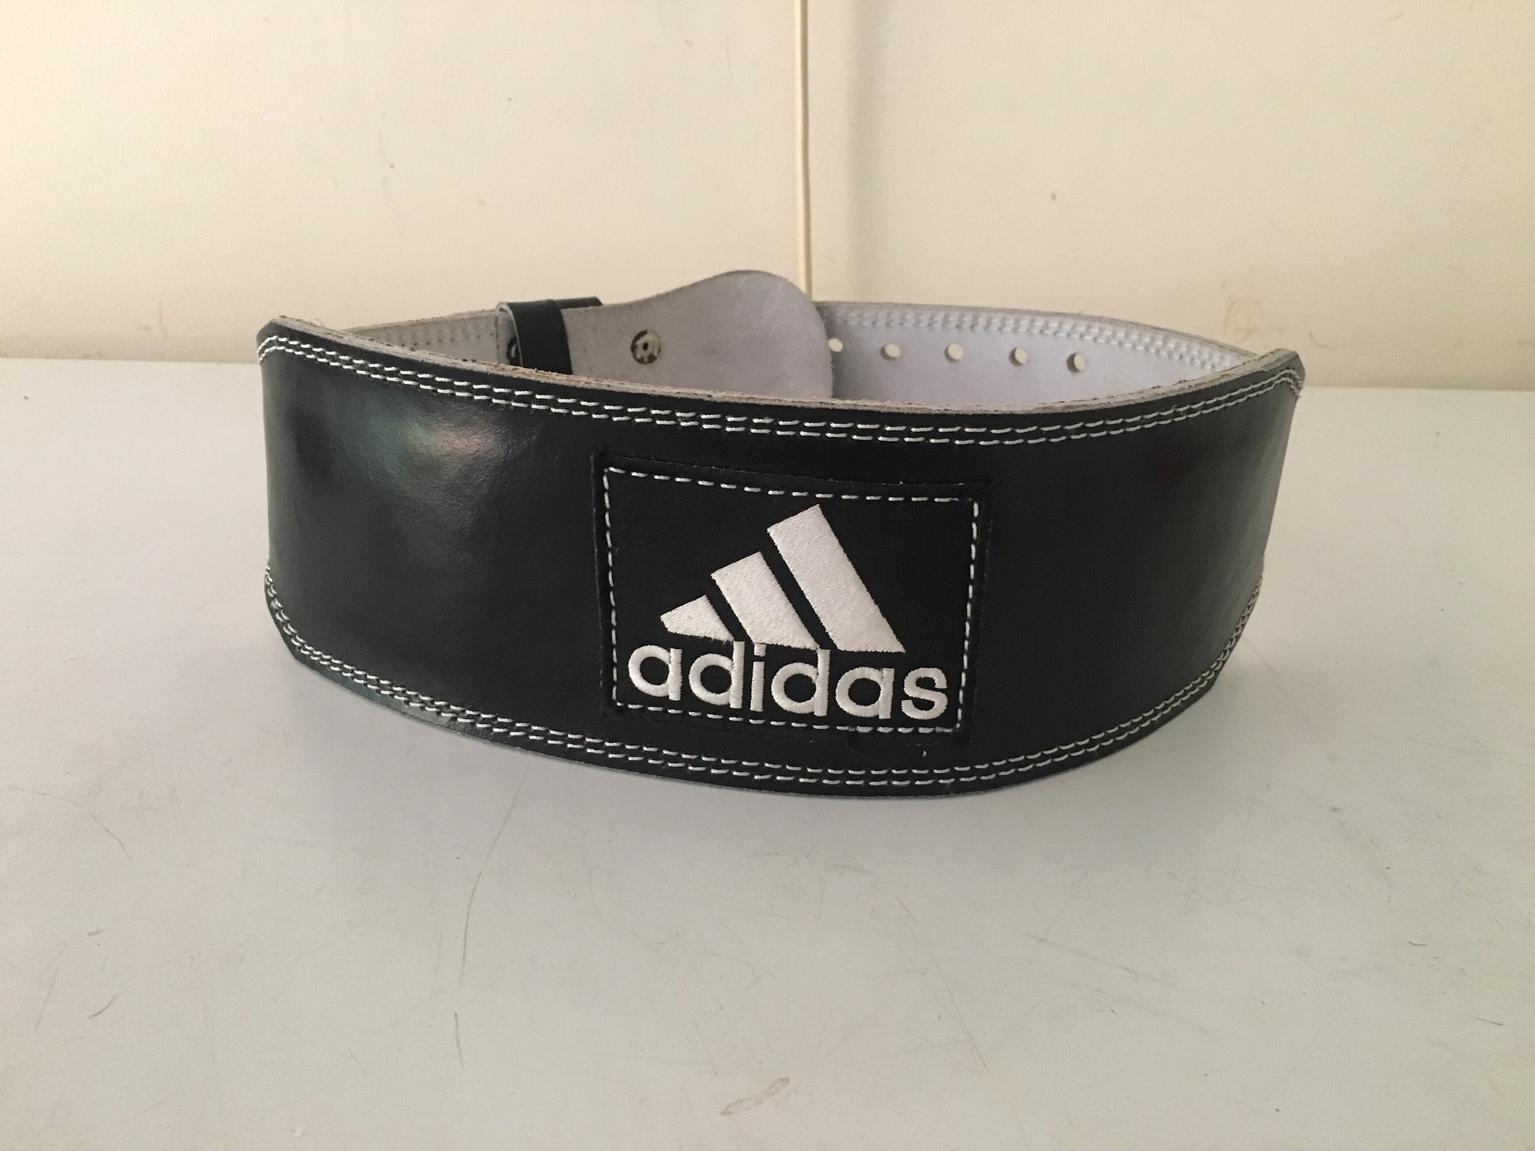 adidas leather weightlifting belt